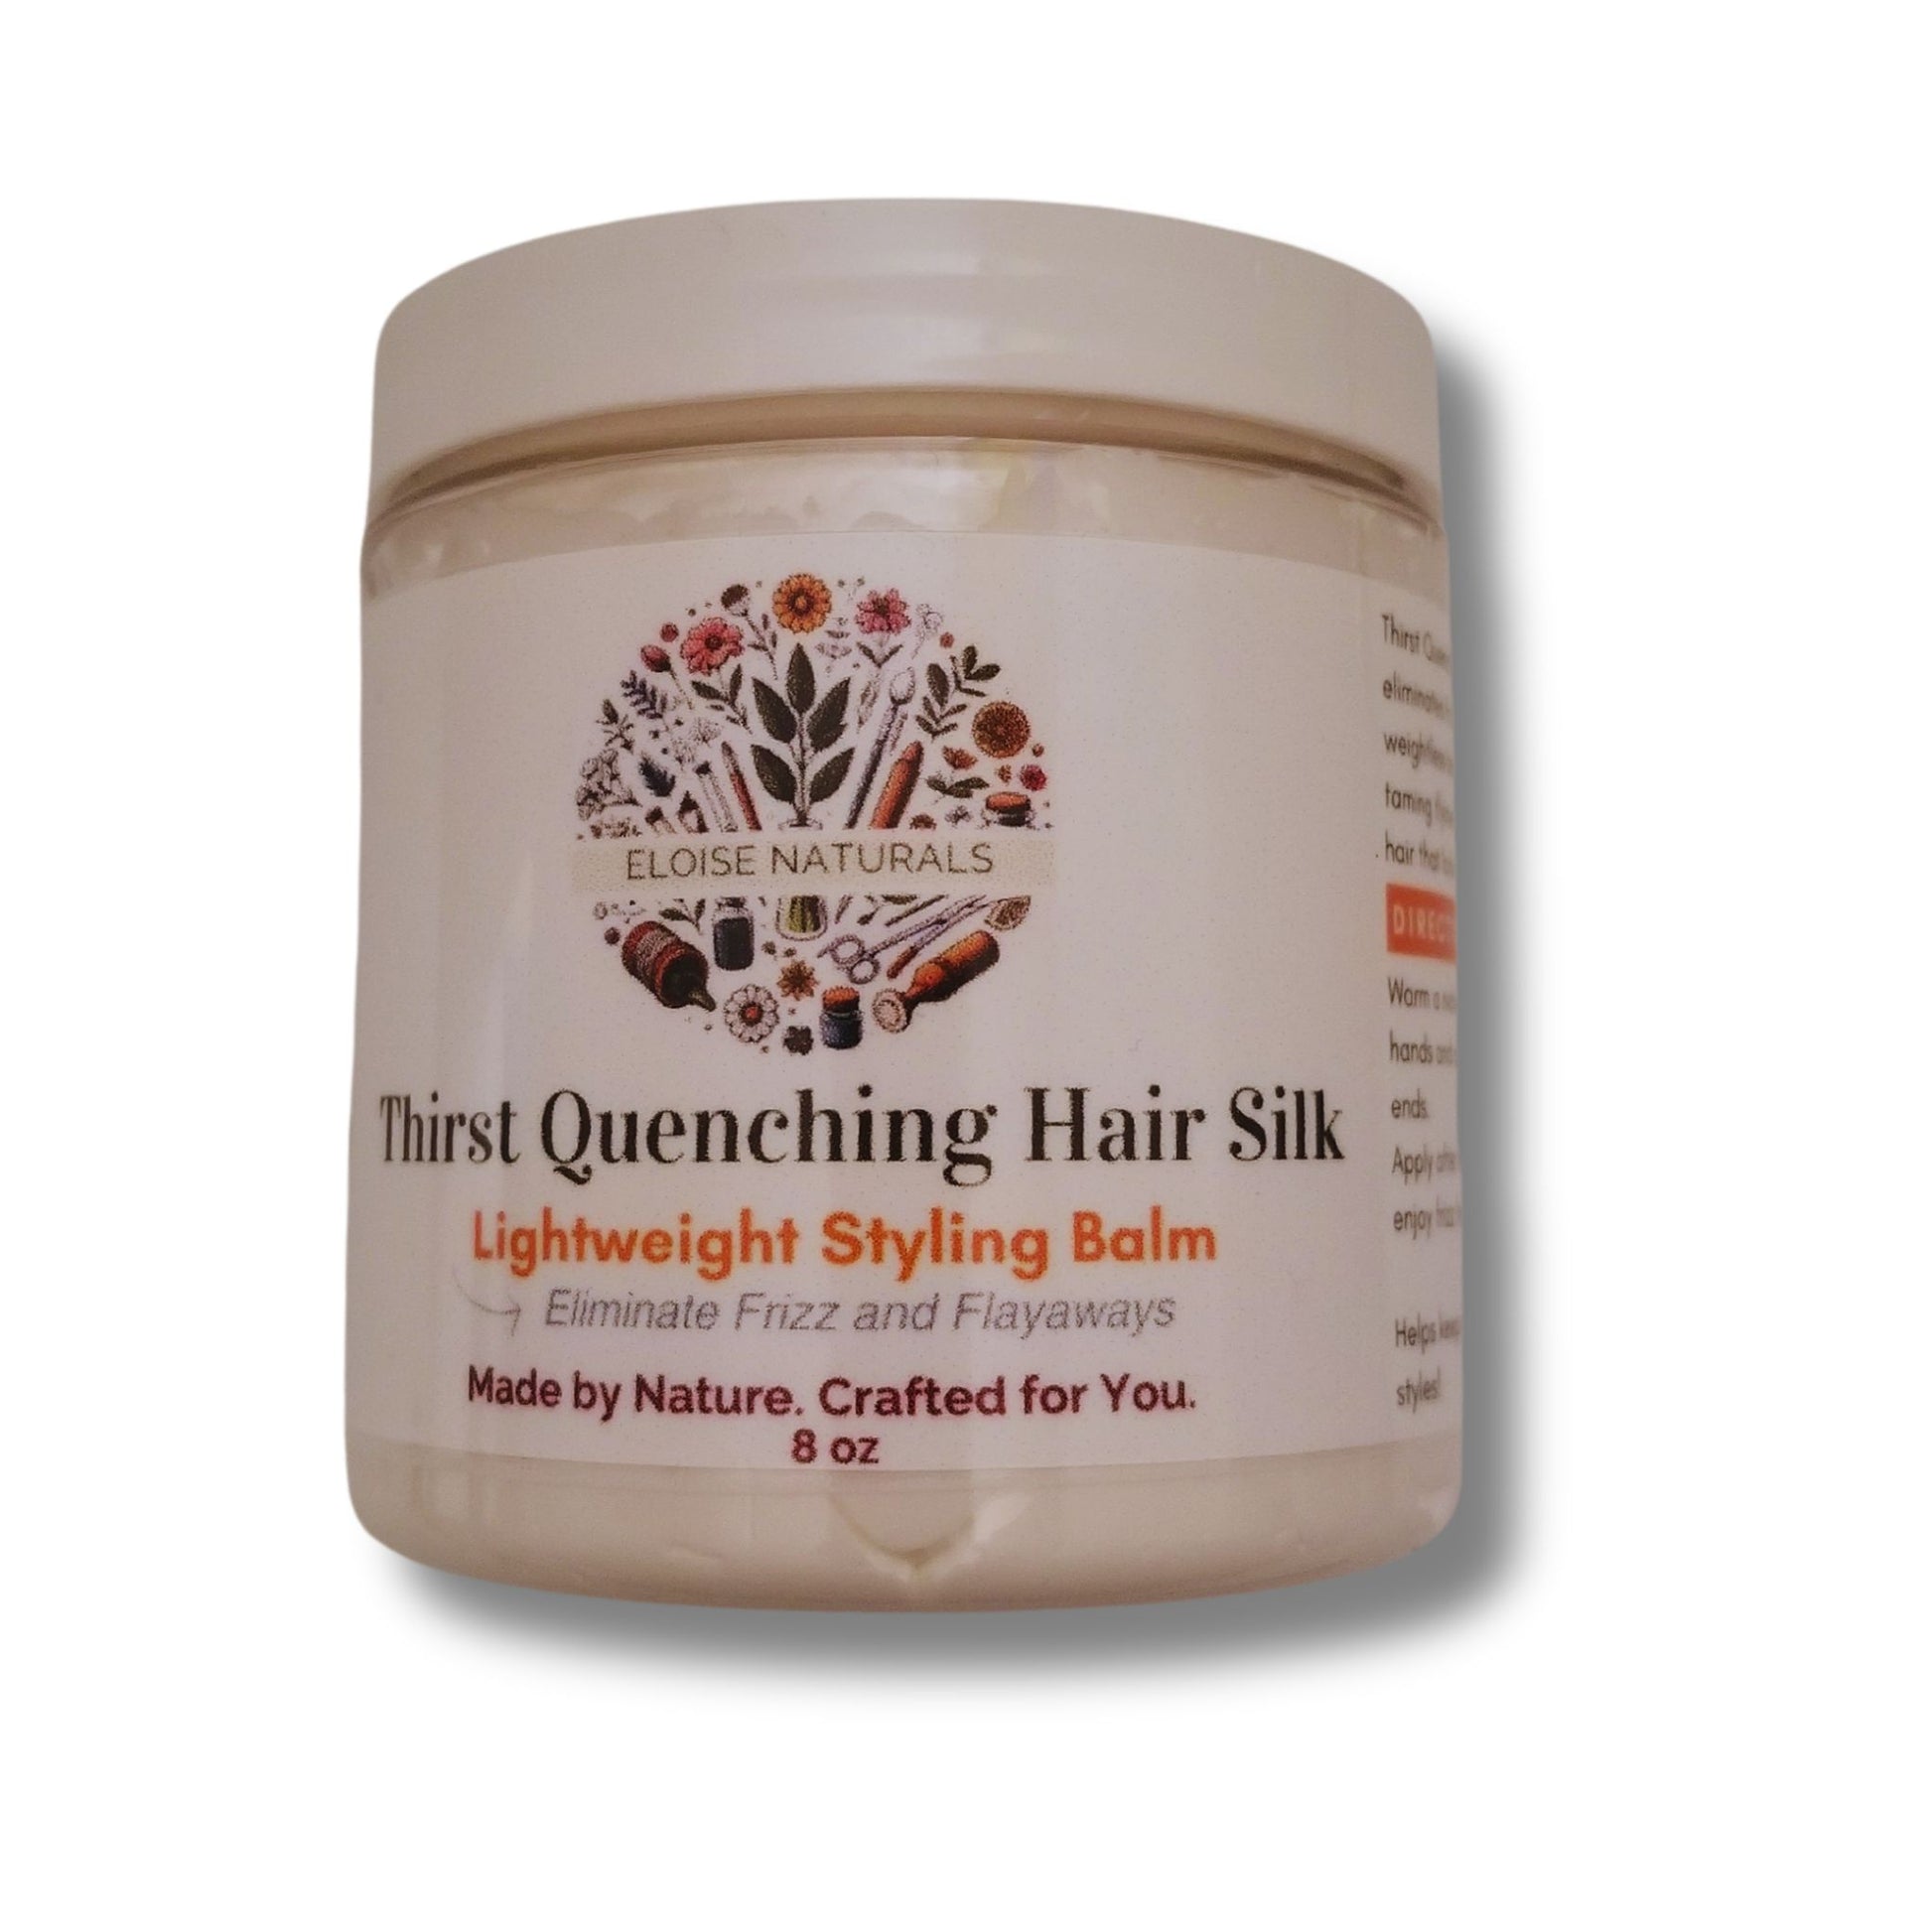 Thirst-Quenching Hair Silk